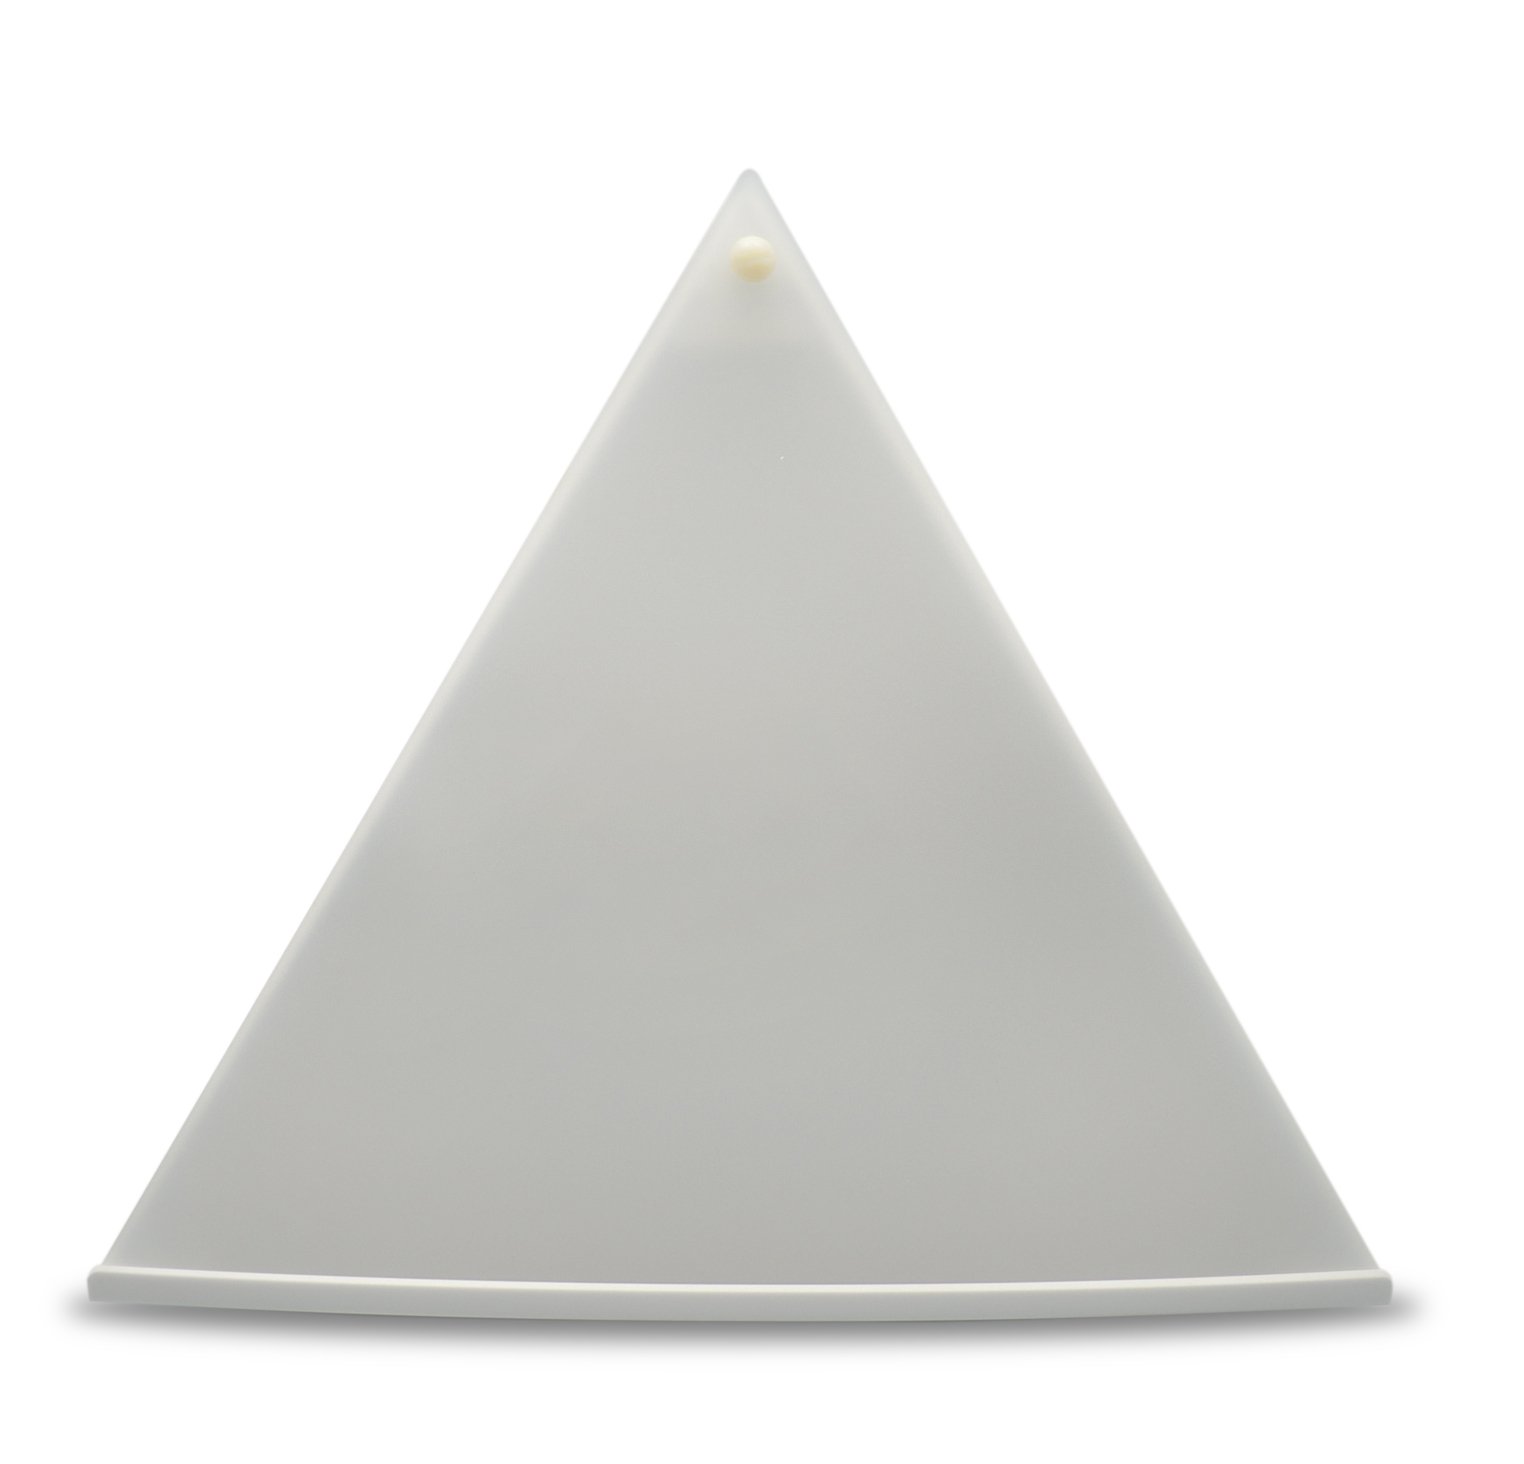 Northern Light Technologies Luxor Mini 10,000 Lux-Light Therapy Desk Lamp, White